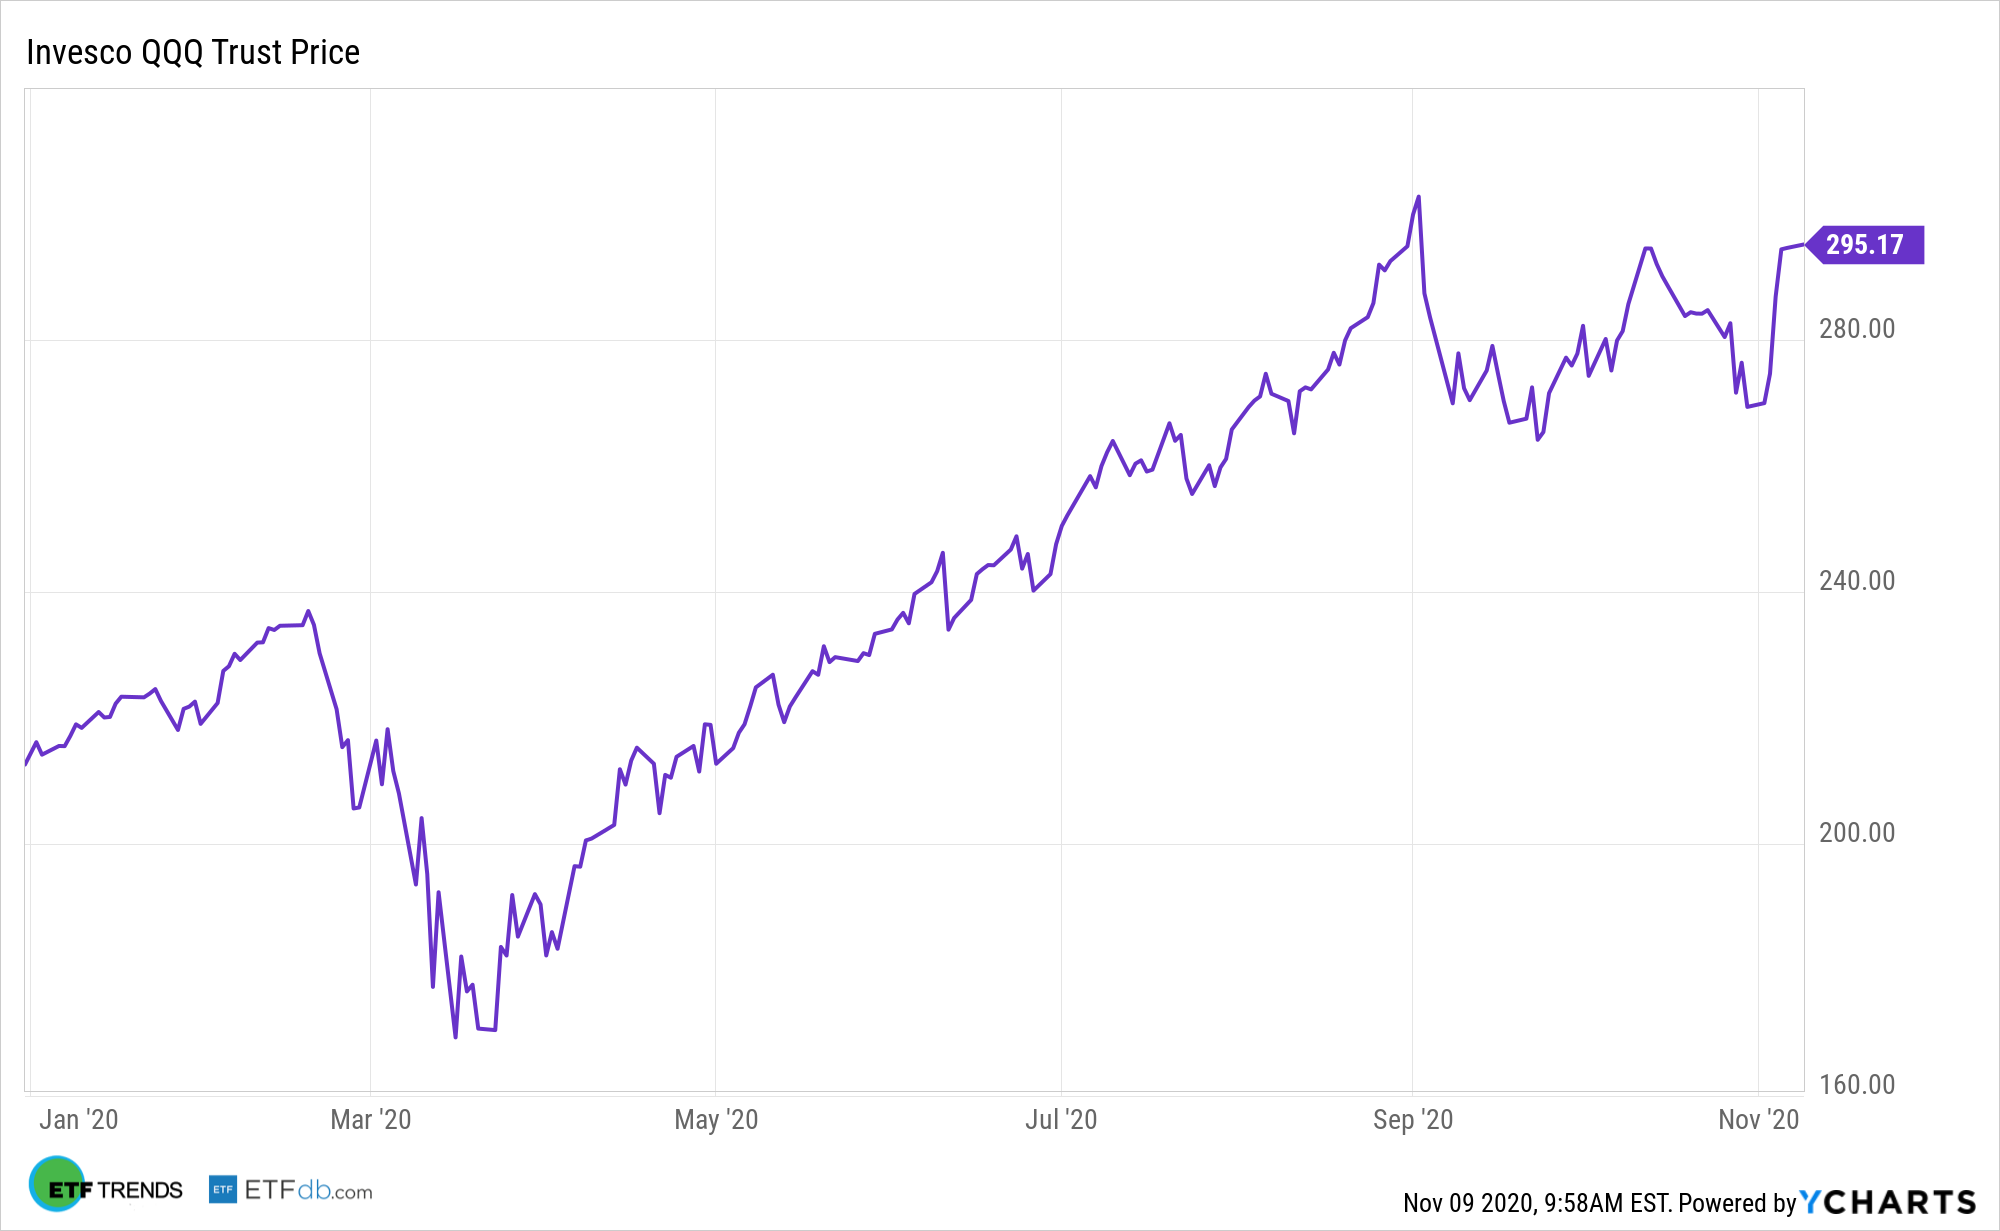 NASDAQ-100 (QQQ) Stock Analysis: Should You Invest in $QQQ? (June 2023) 